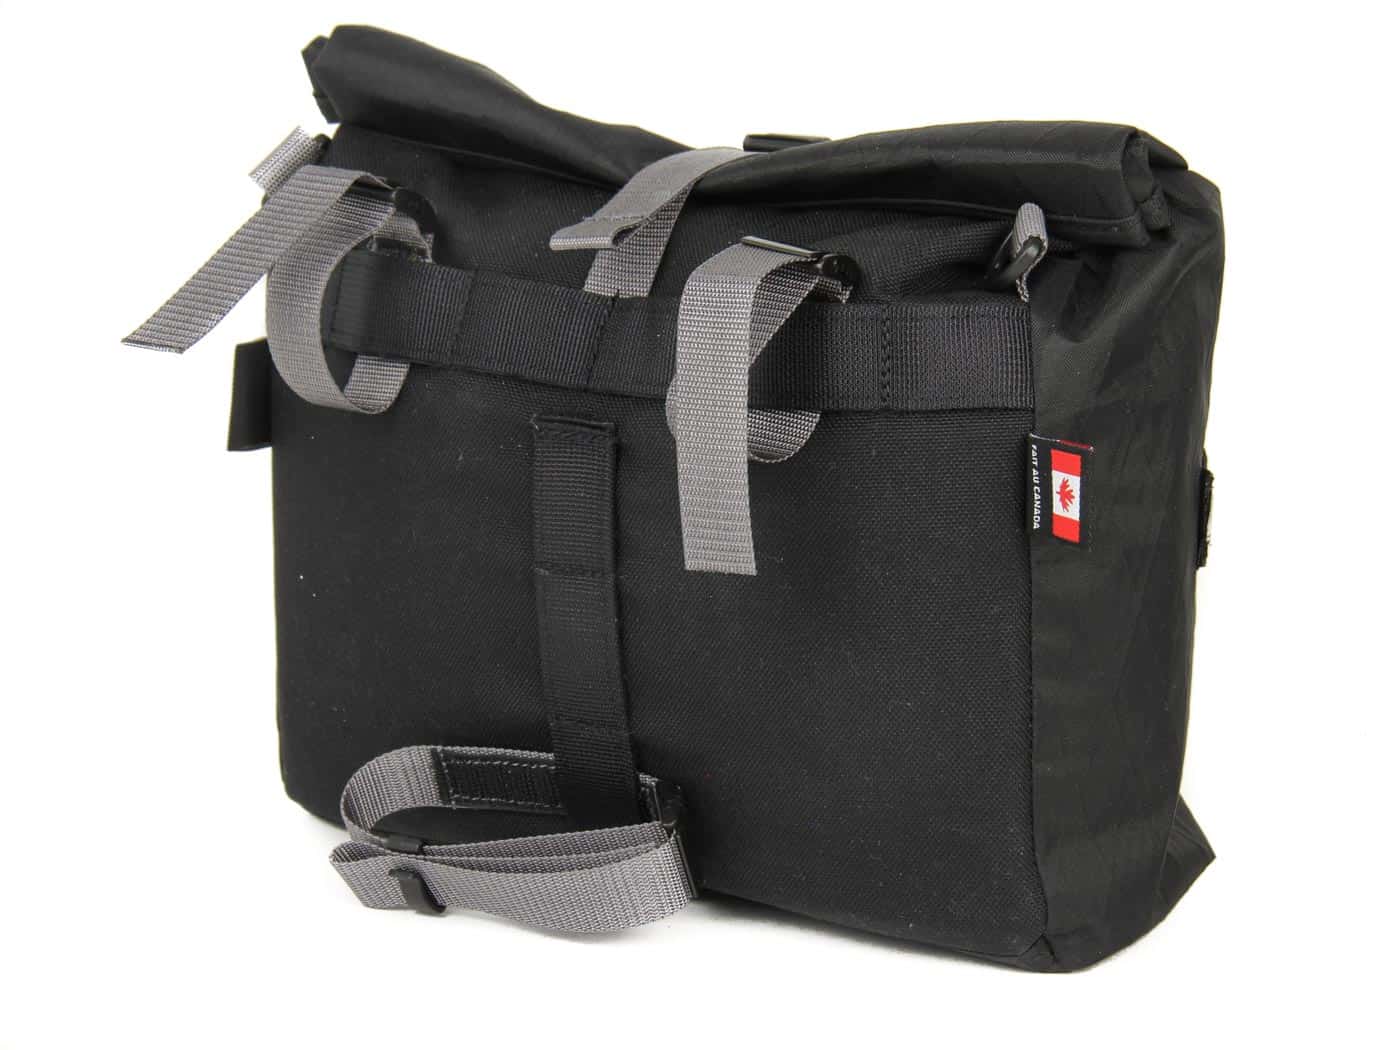 BB Packer Handlebar Bag - 5 L